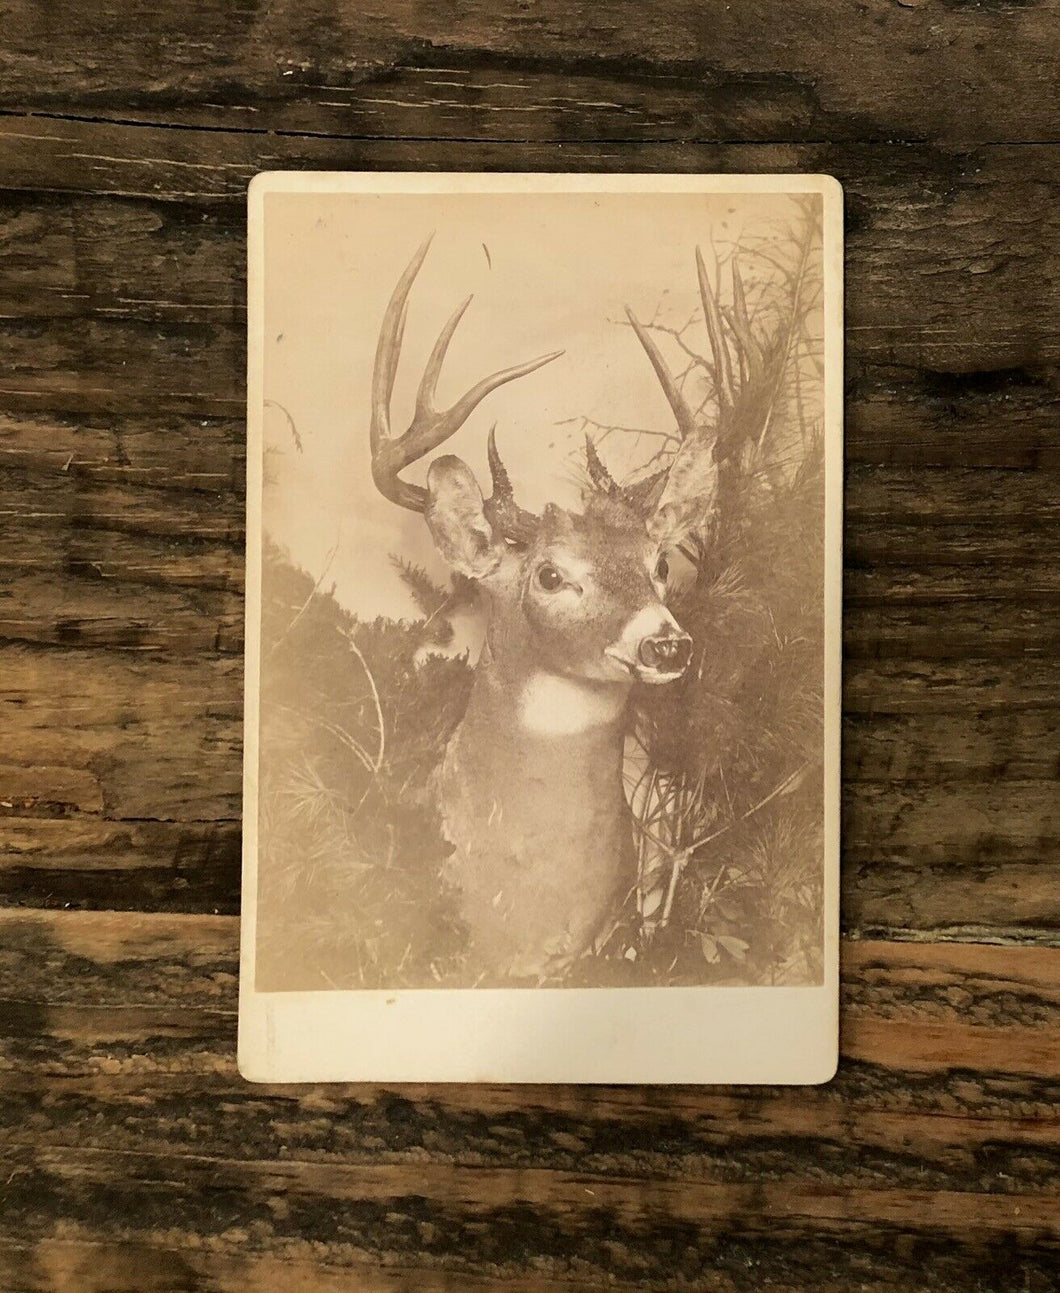 Unusual Deer Head Taxidermy Mount Antique Photo 1800s New Bedford Massachusetts